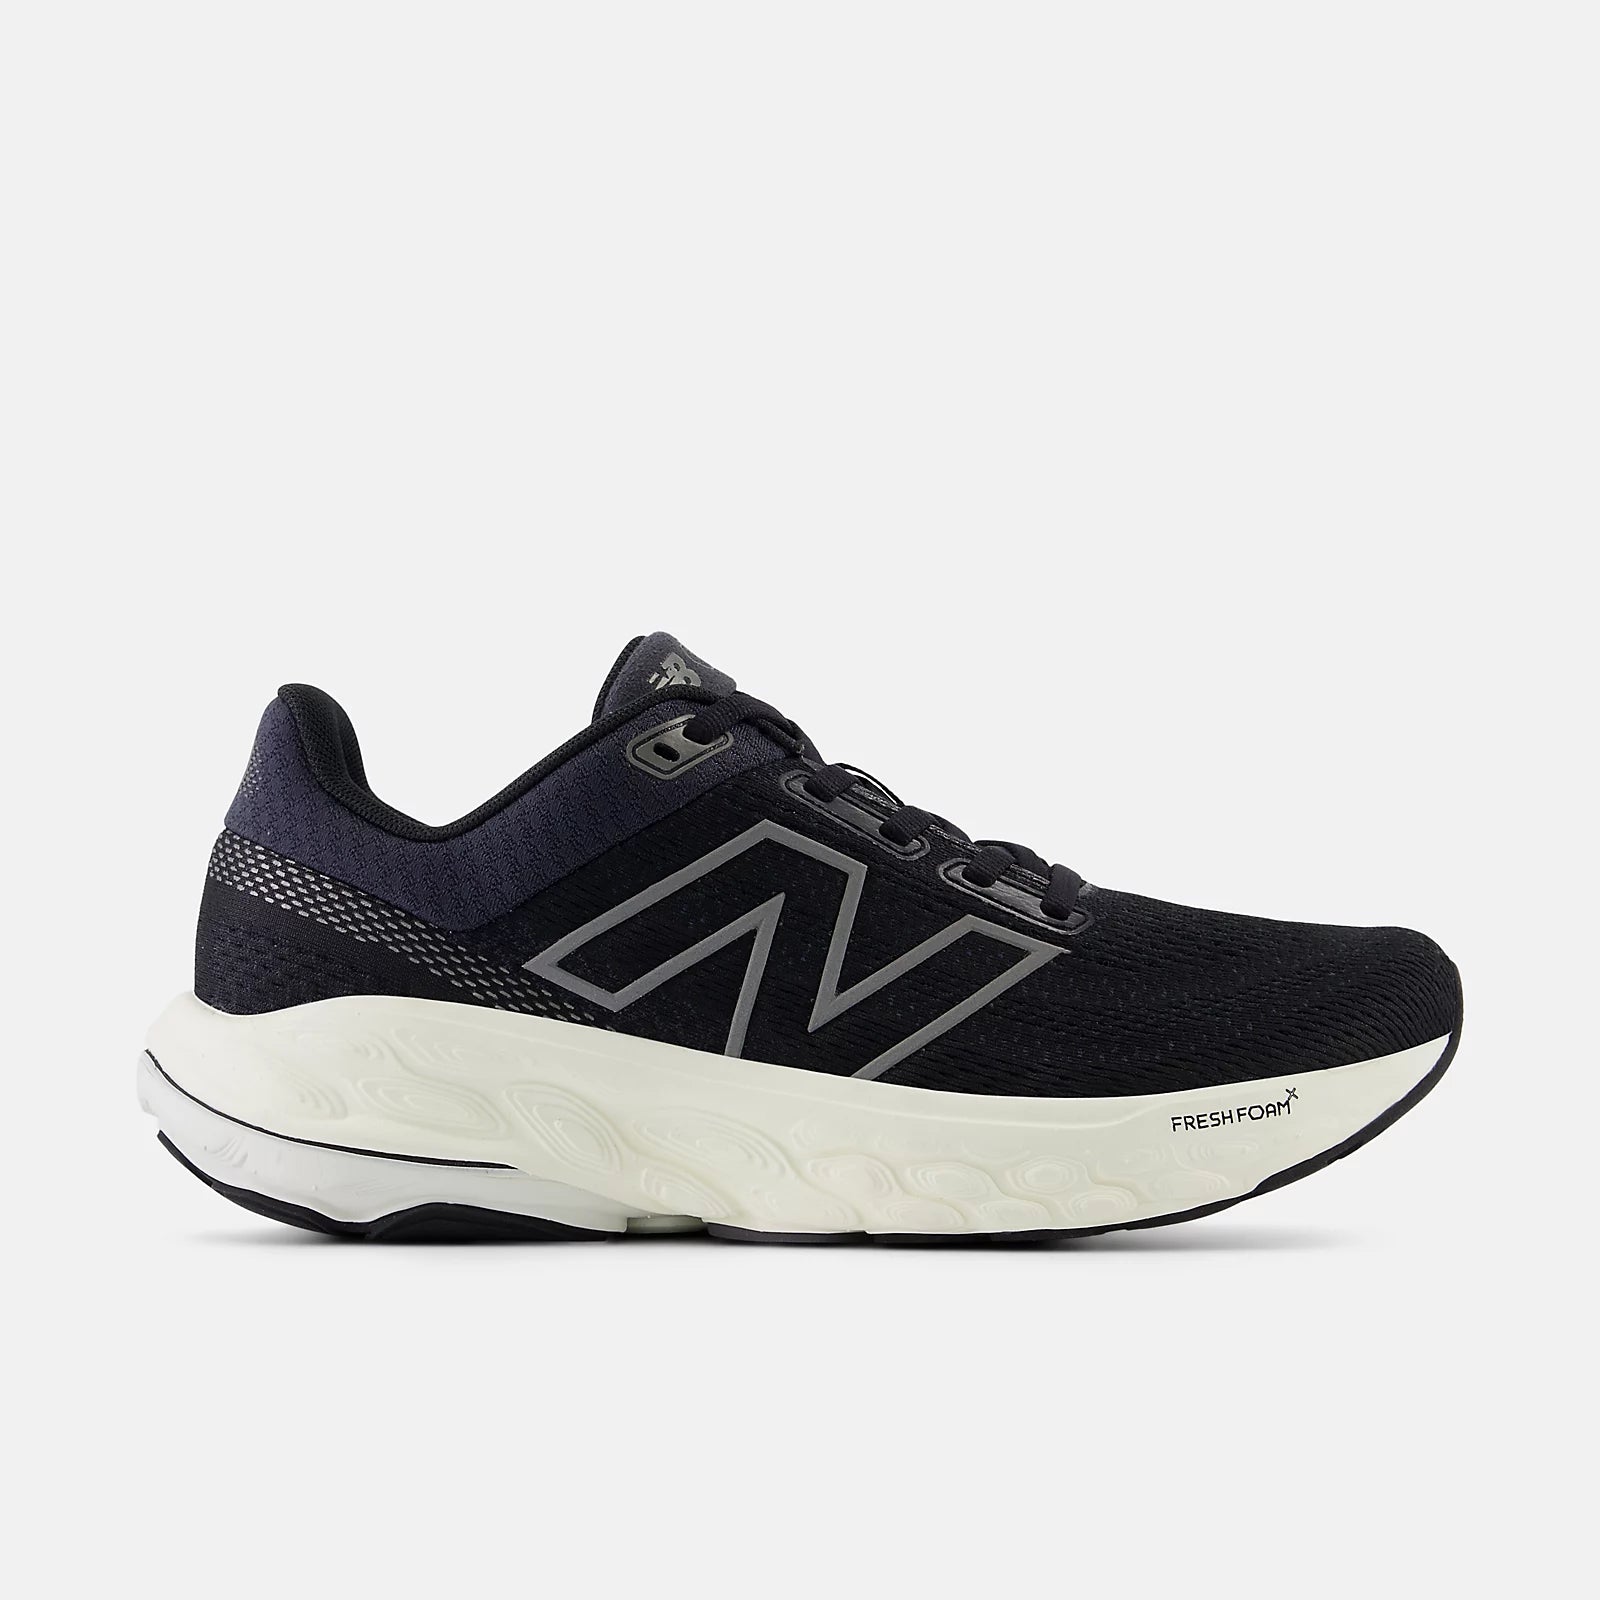 New Balance – Orleans Shoe Co.